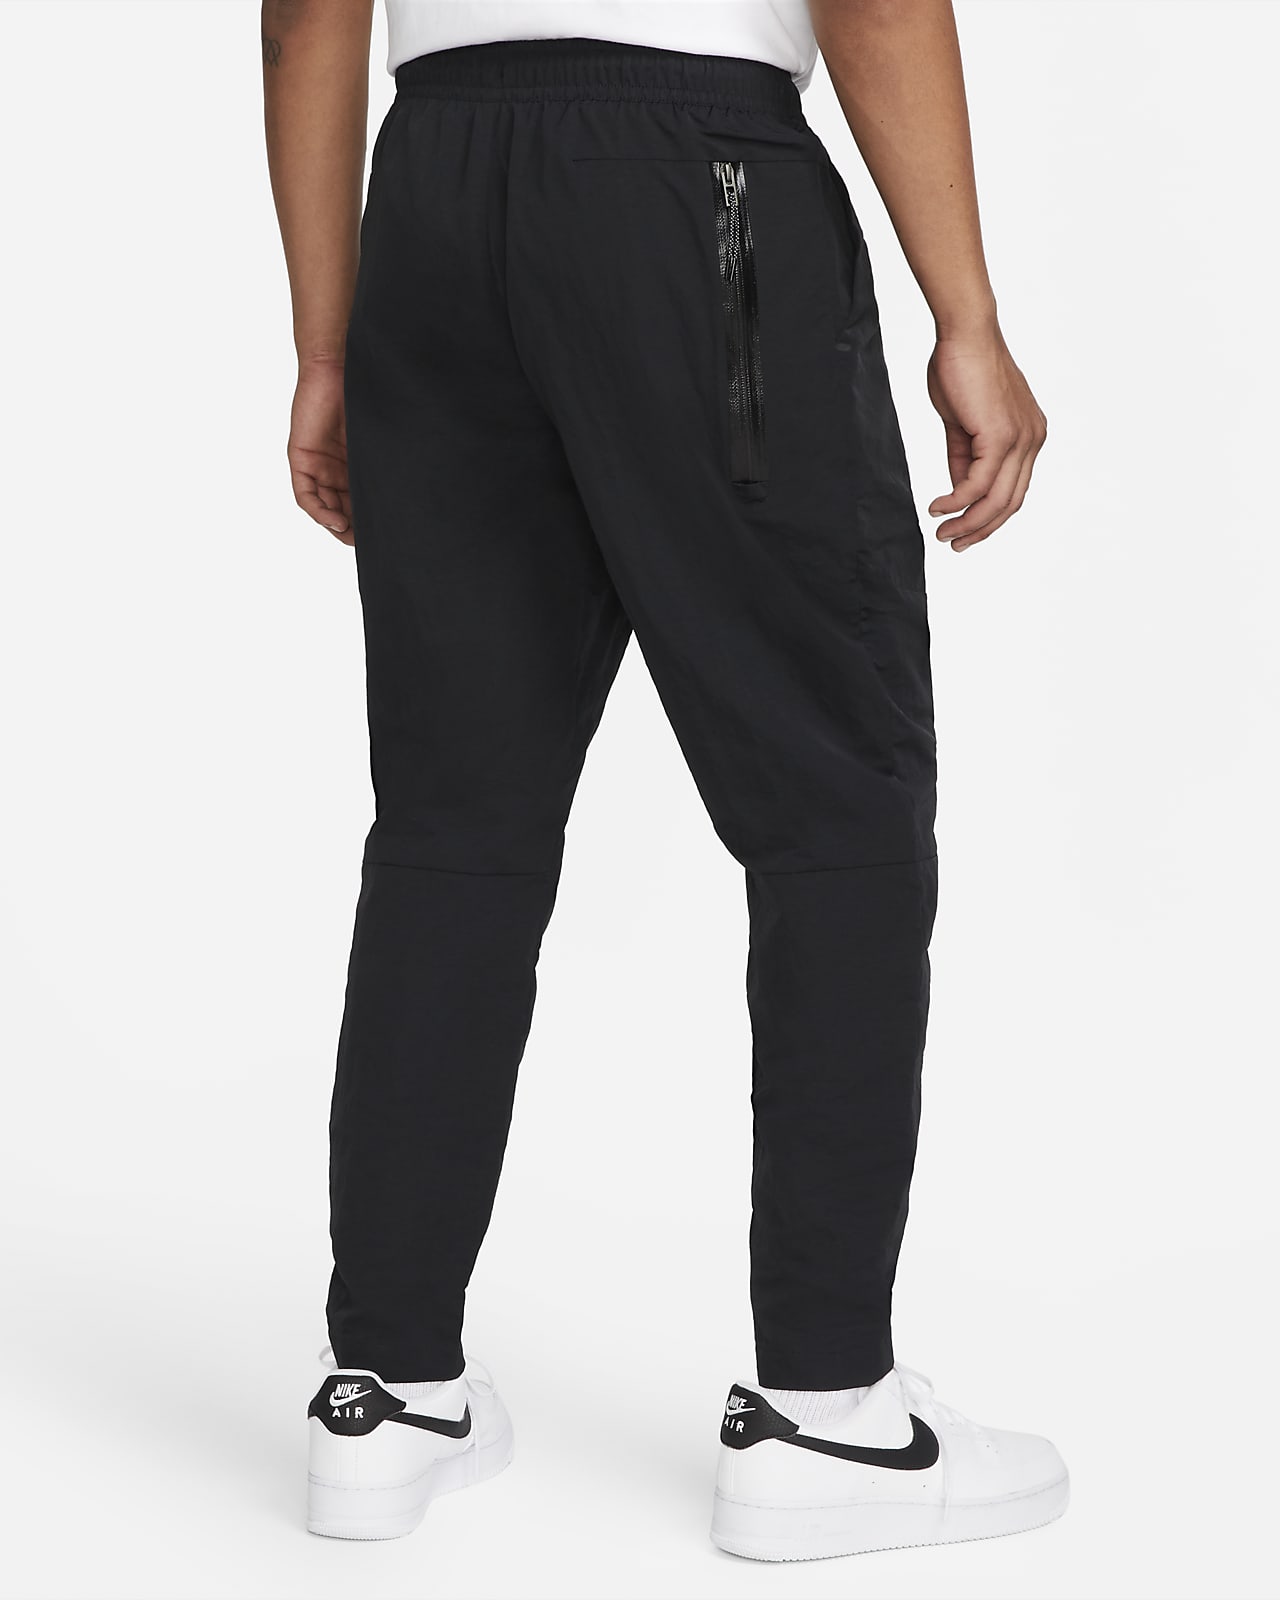 Styling The Nike Sportswear Palazzo Pants: Wide-Leg Sweatpants In Black &  Gray - The Mom Edit